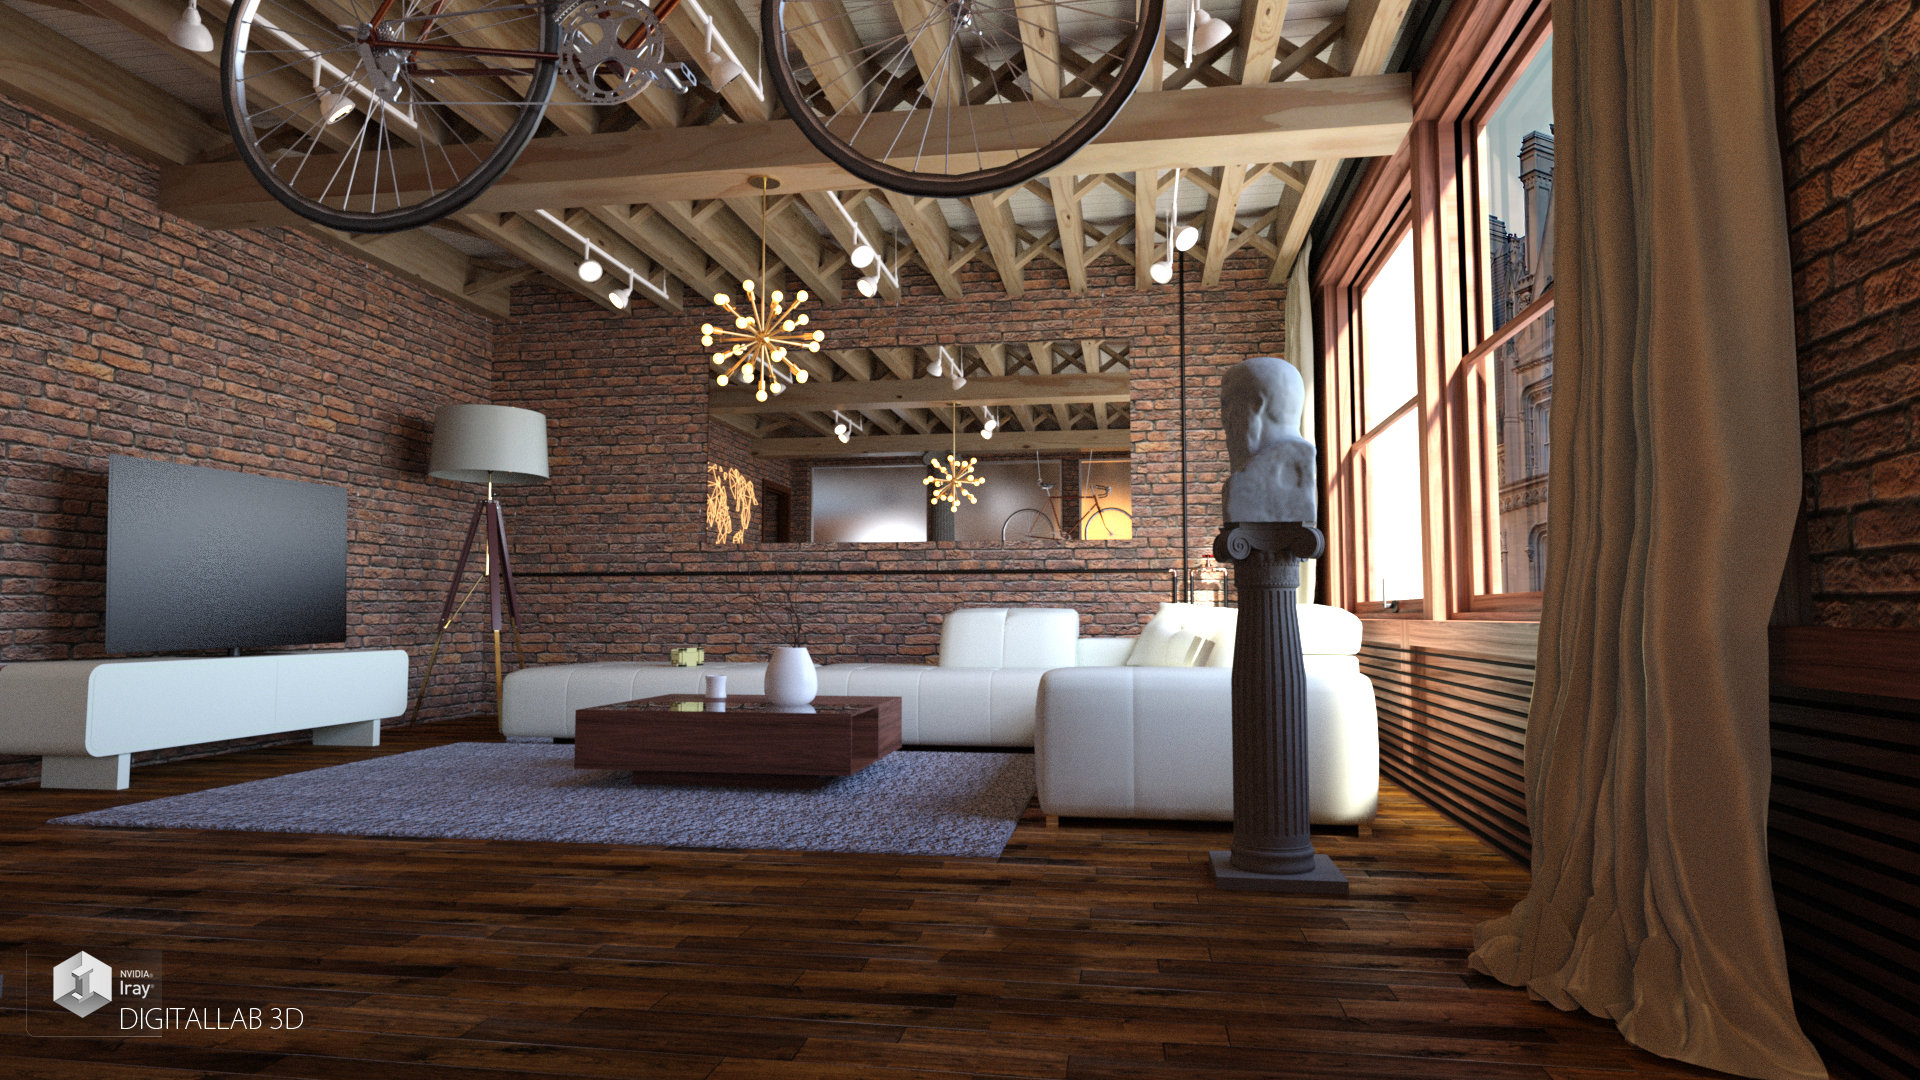 NY Living Room by: Digitallab3D, 3D Models by Daz 3D